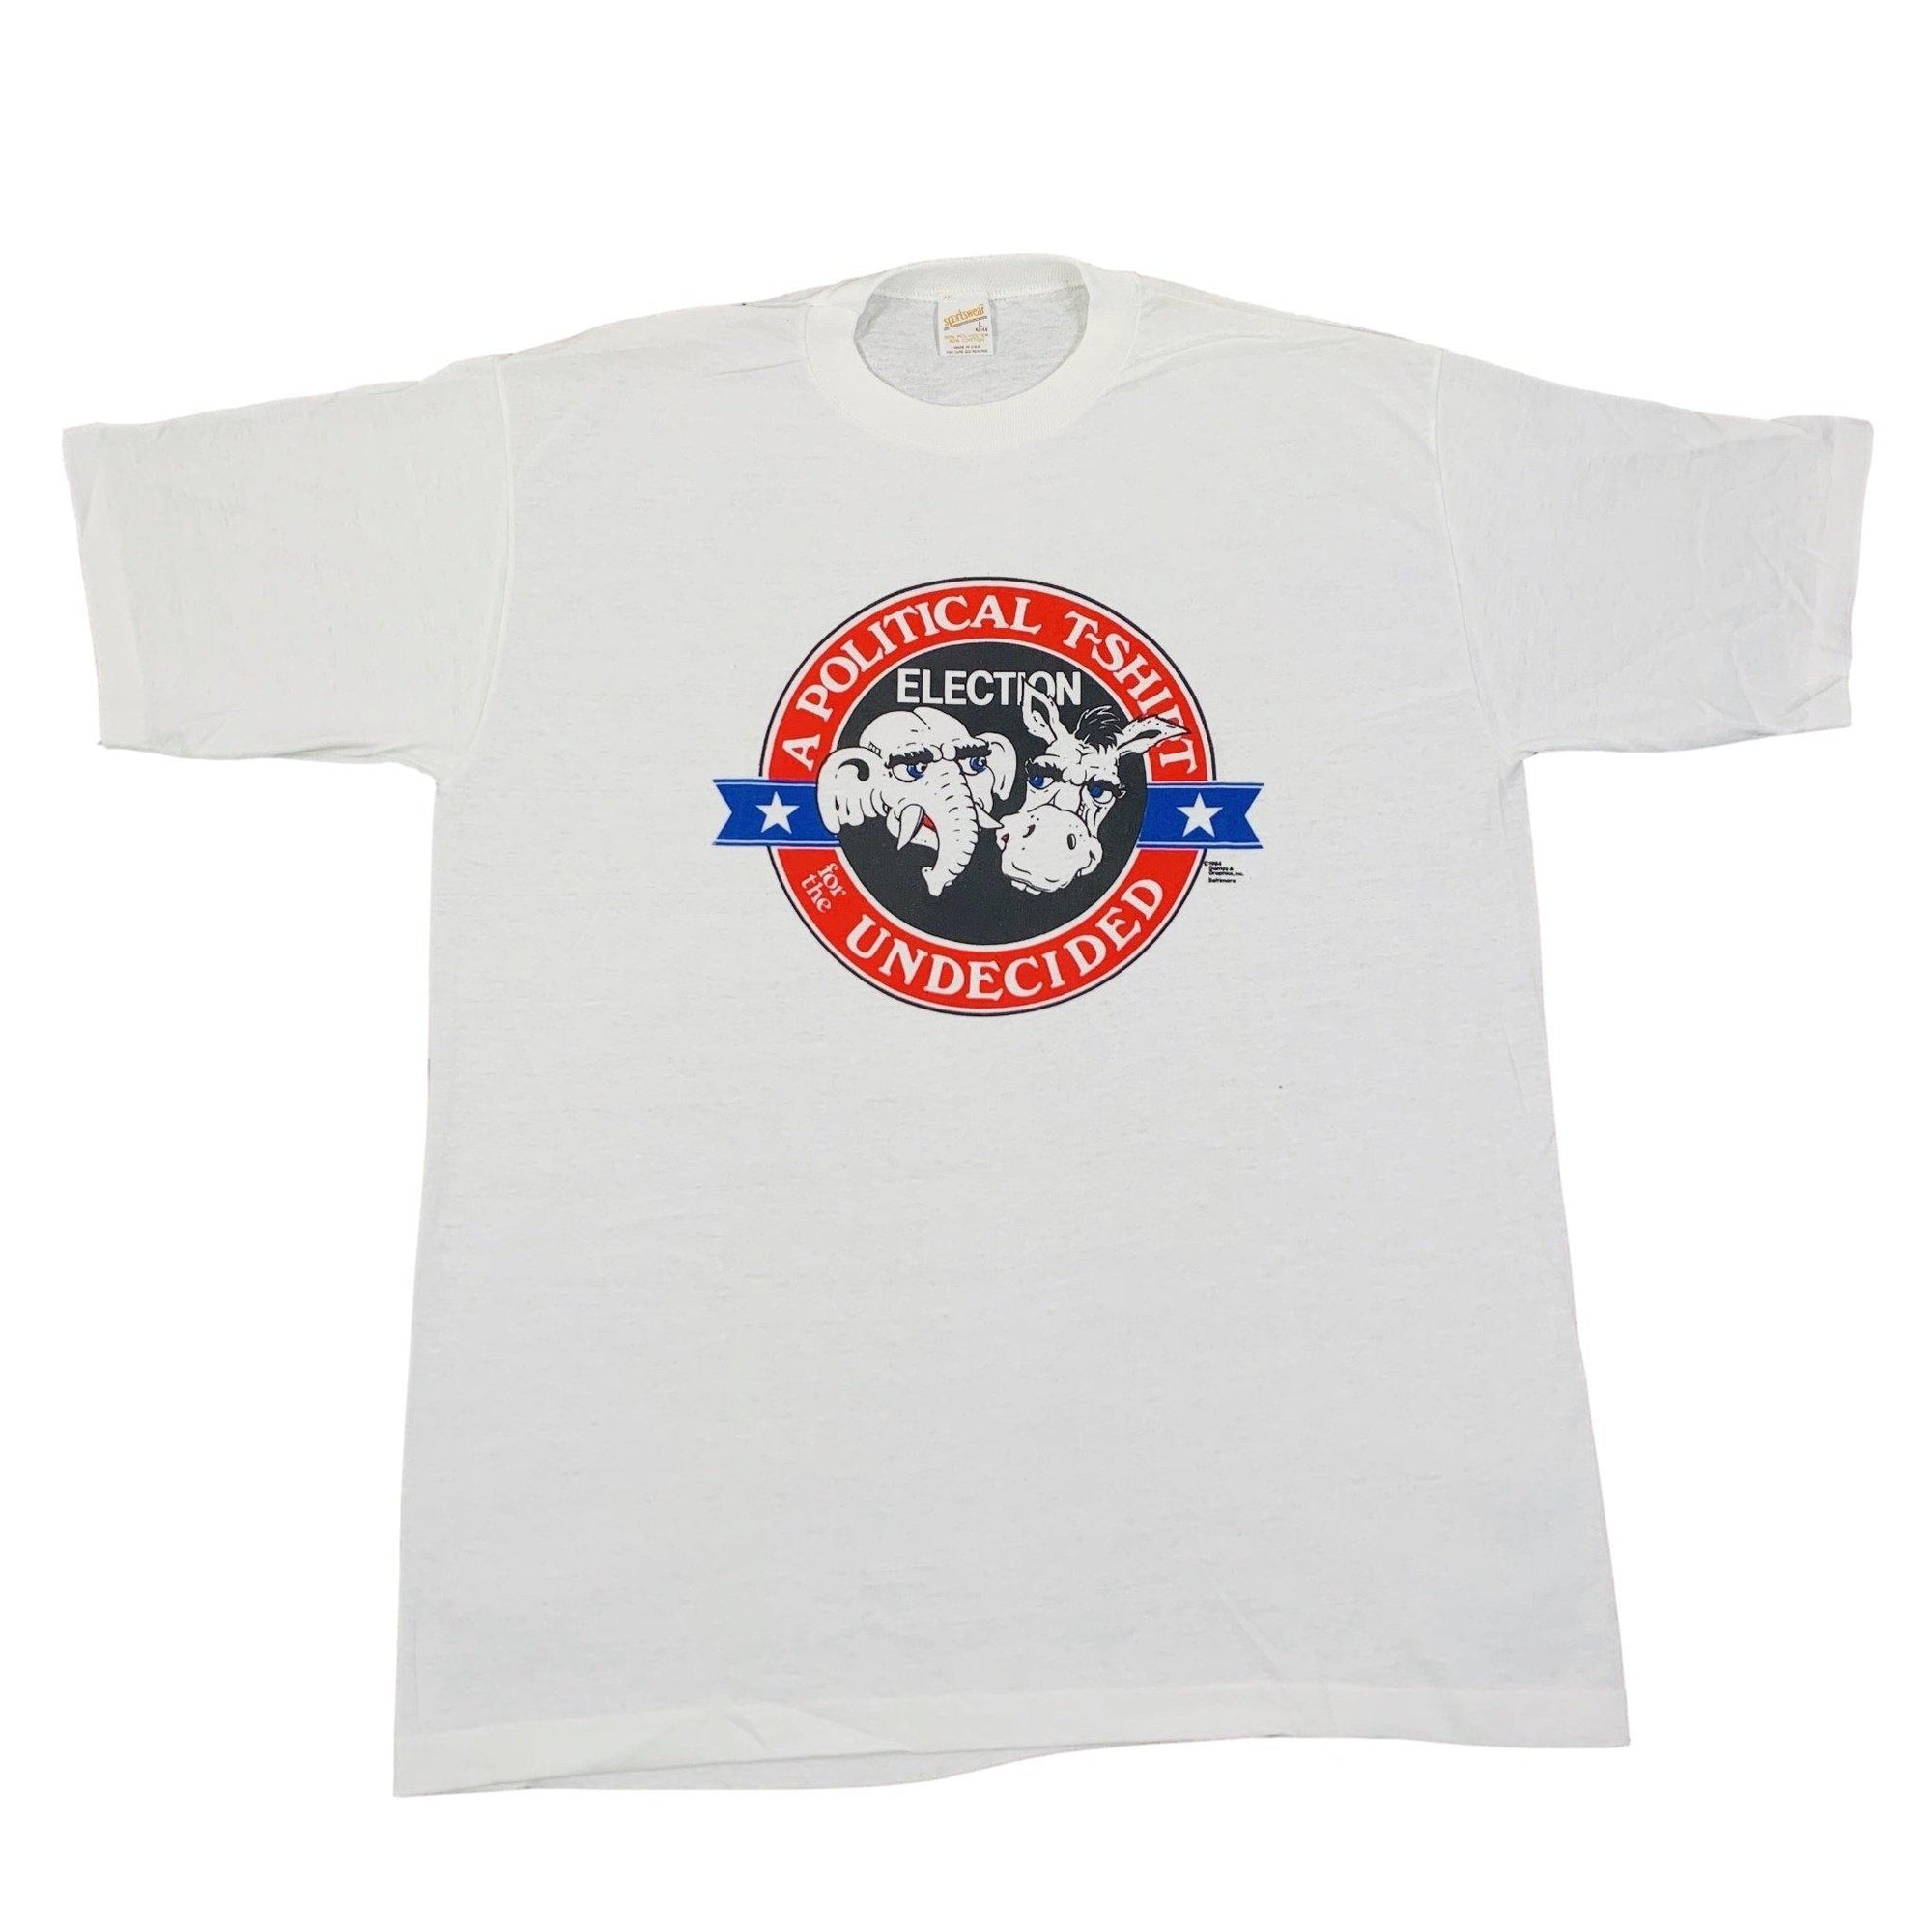 Vintage Political "Undecided" T-Shirt - jointcustodydc